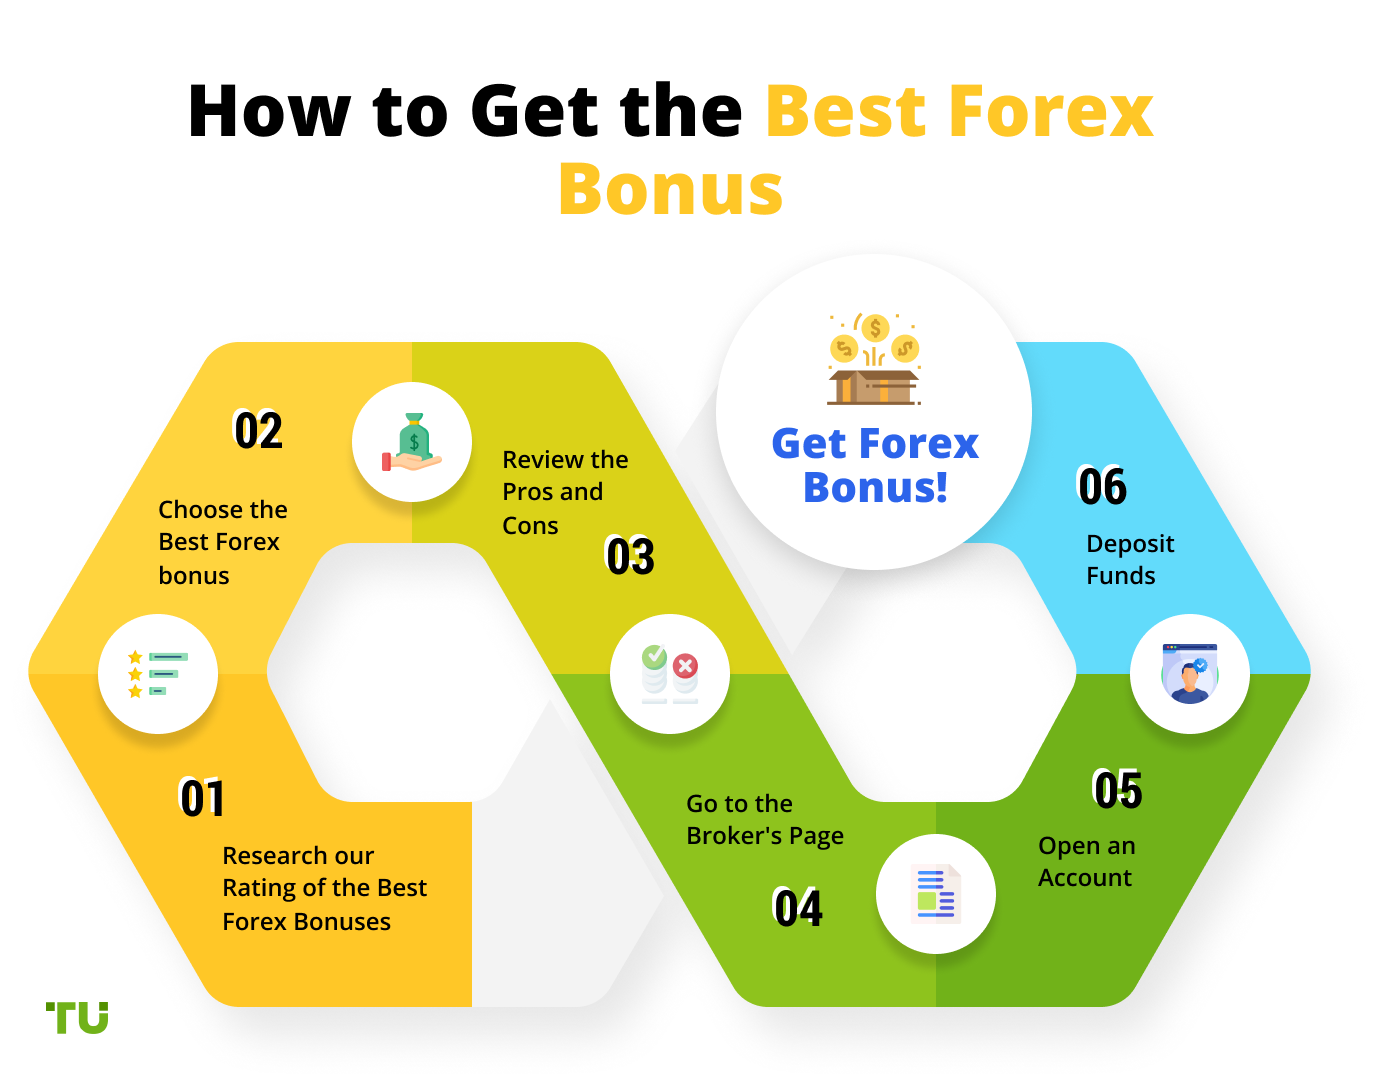 How to Get the Best Forex Bonus